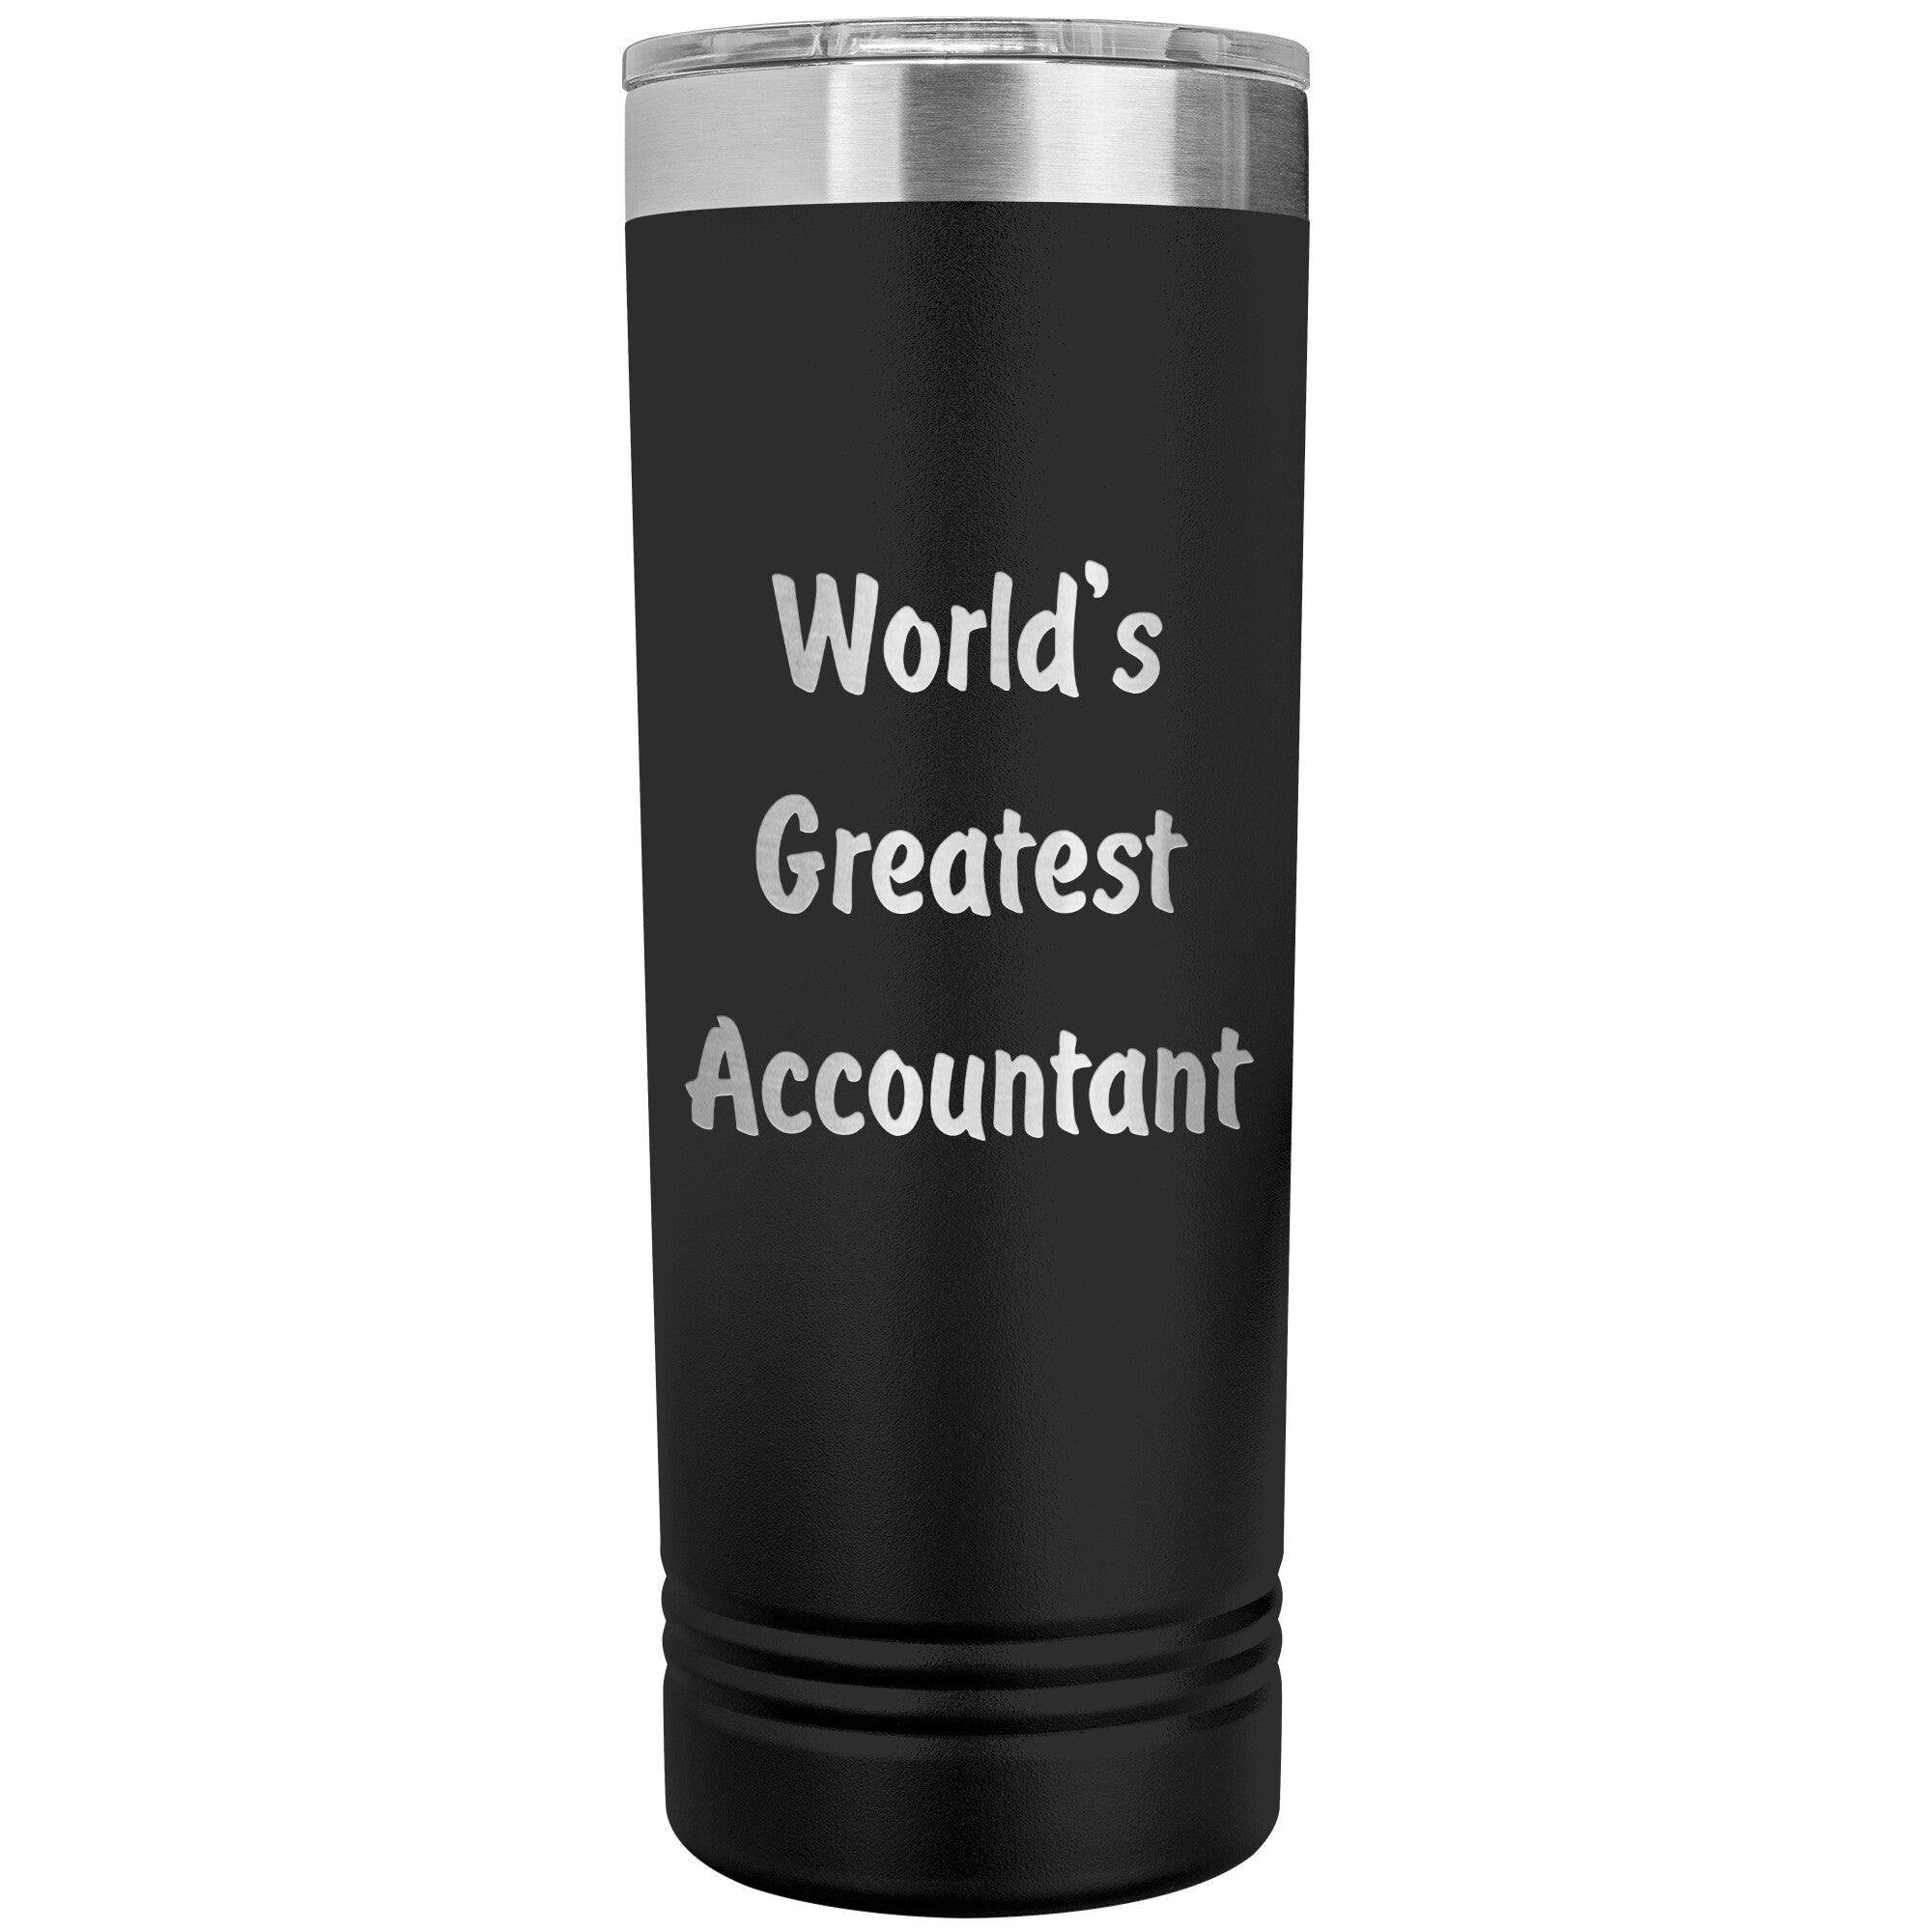 World's Greatest Accountant - 22oz Insulated Skinny Tumbler